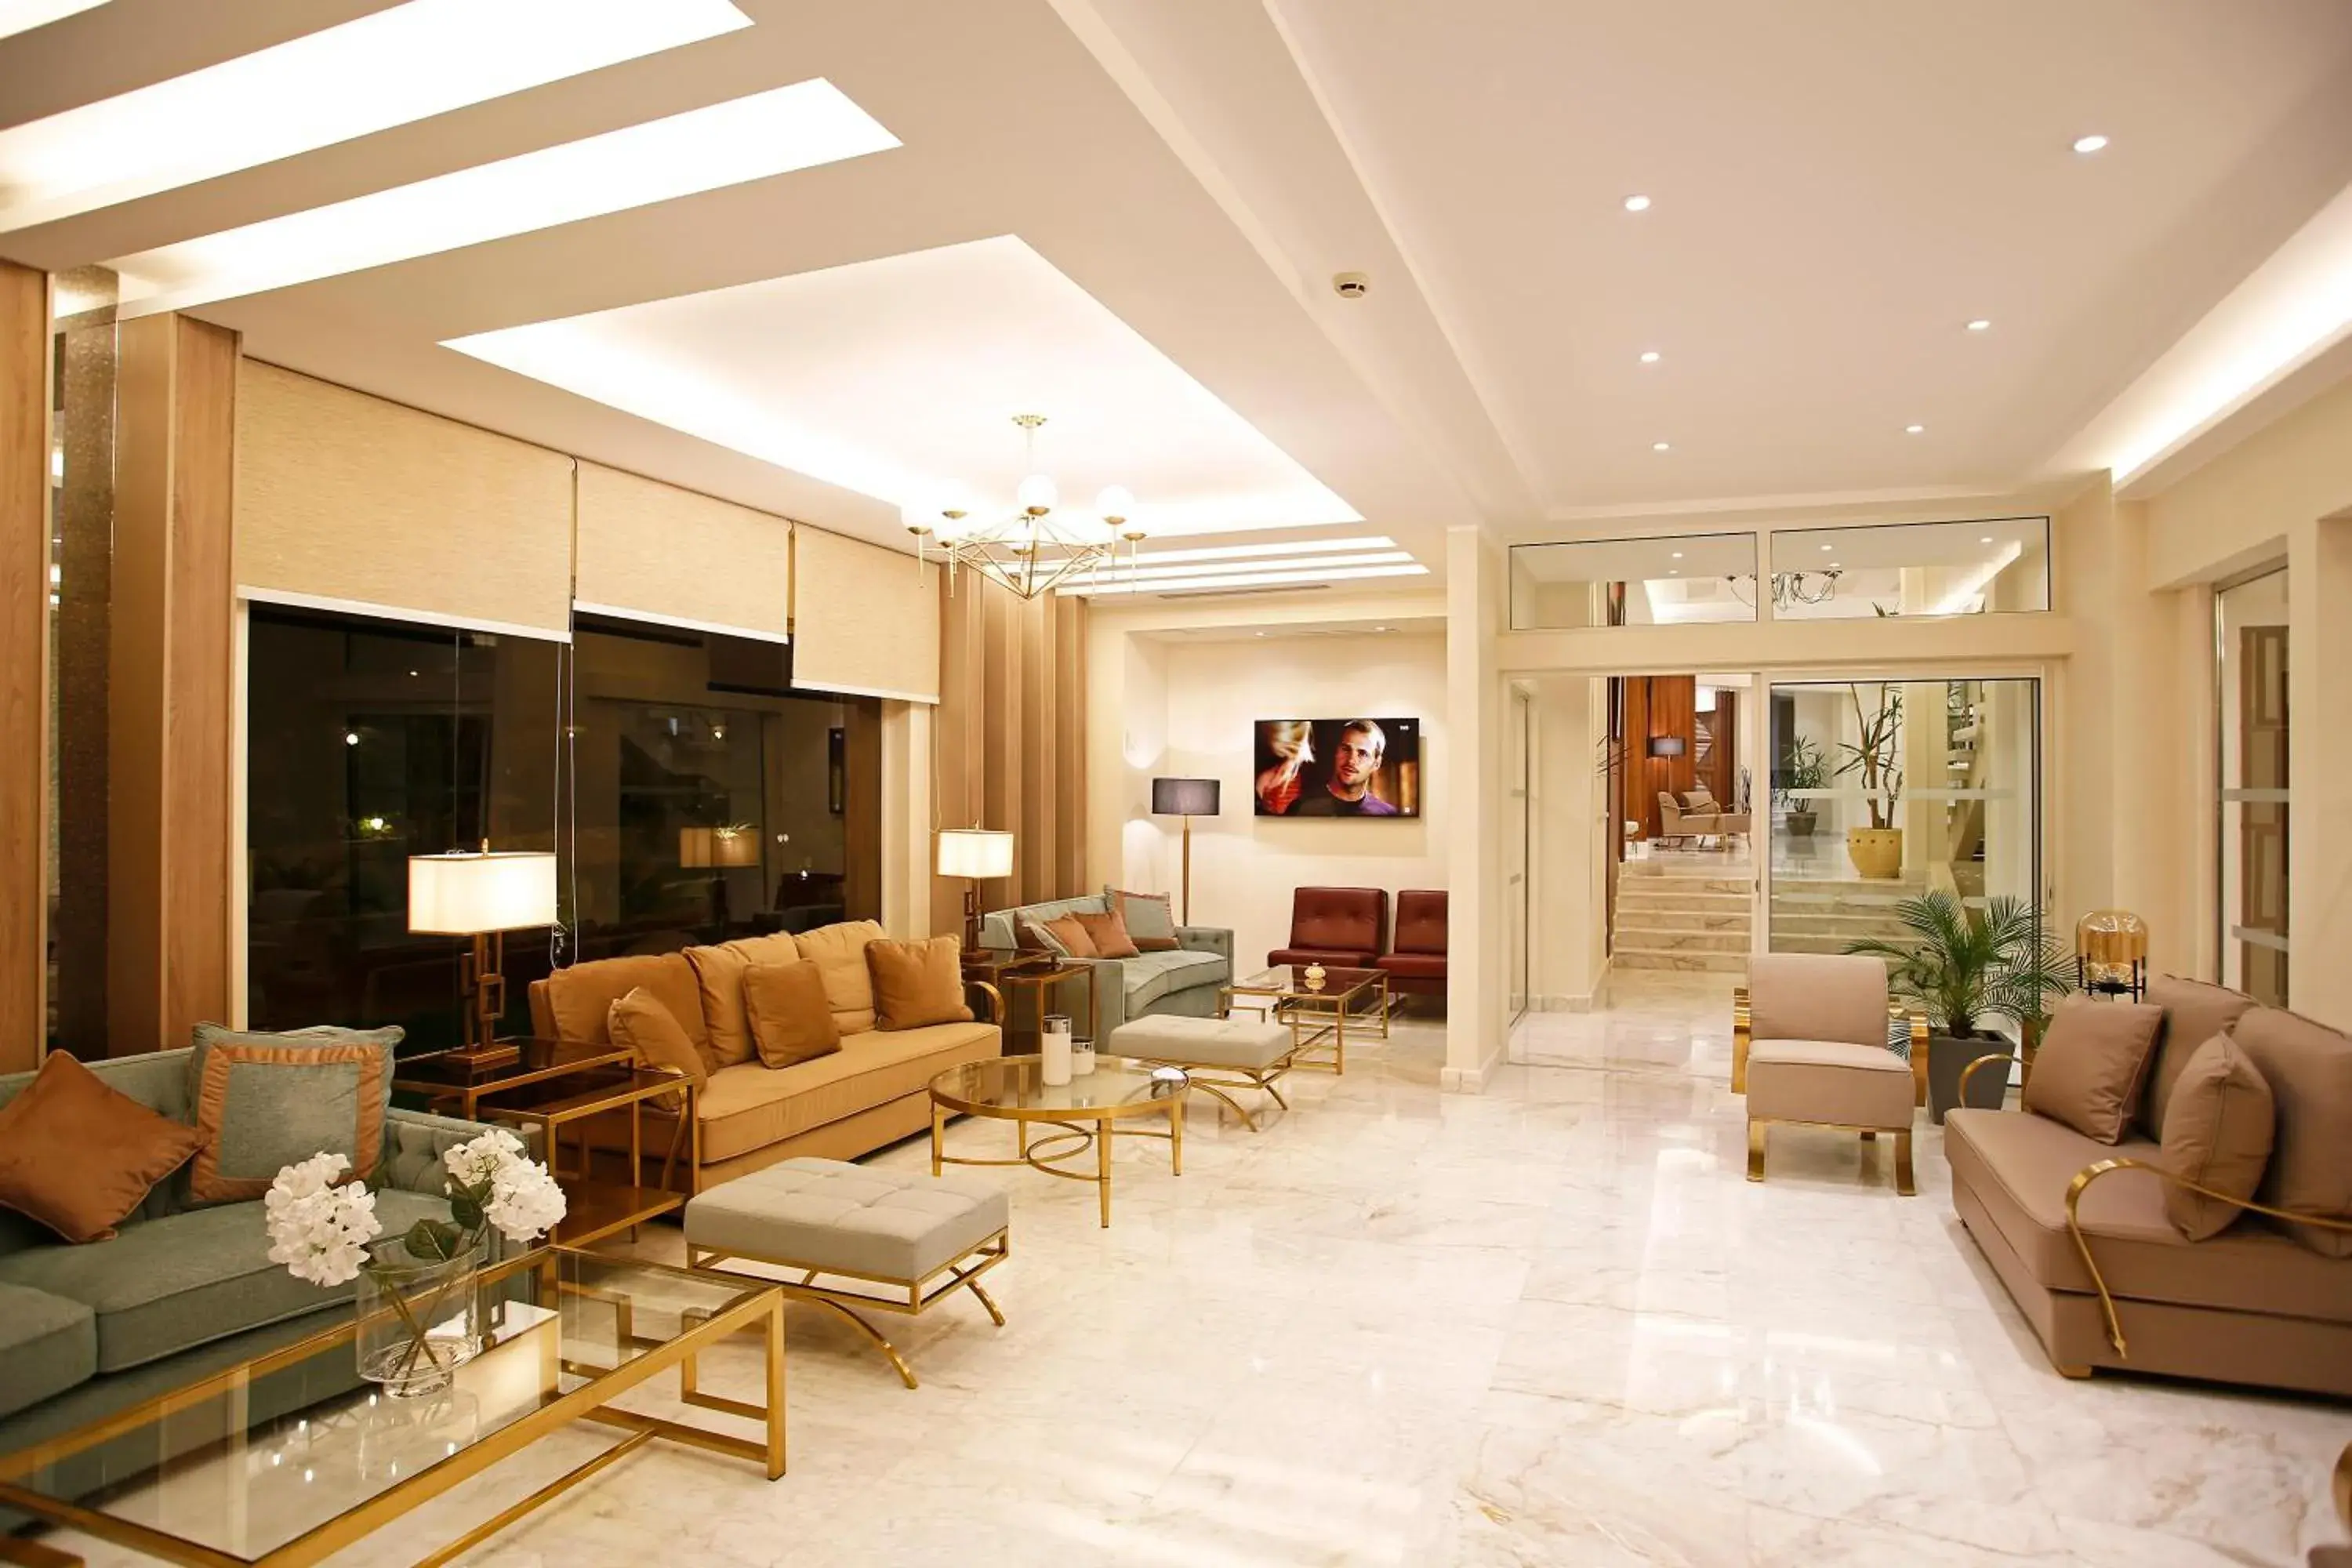 Lobby or reception, Lobby/Reception in HOTEL CORSICA